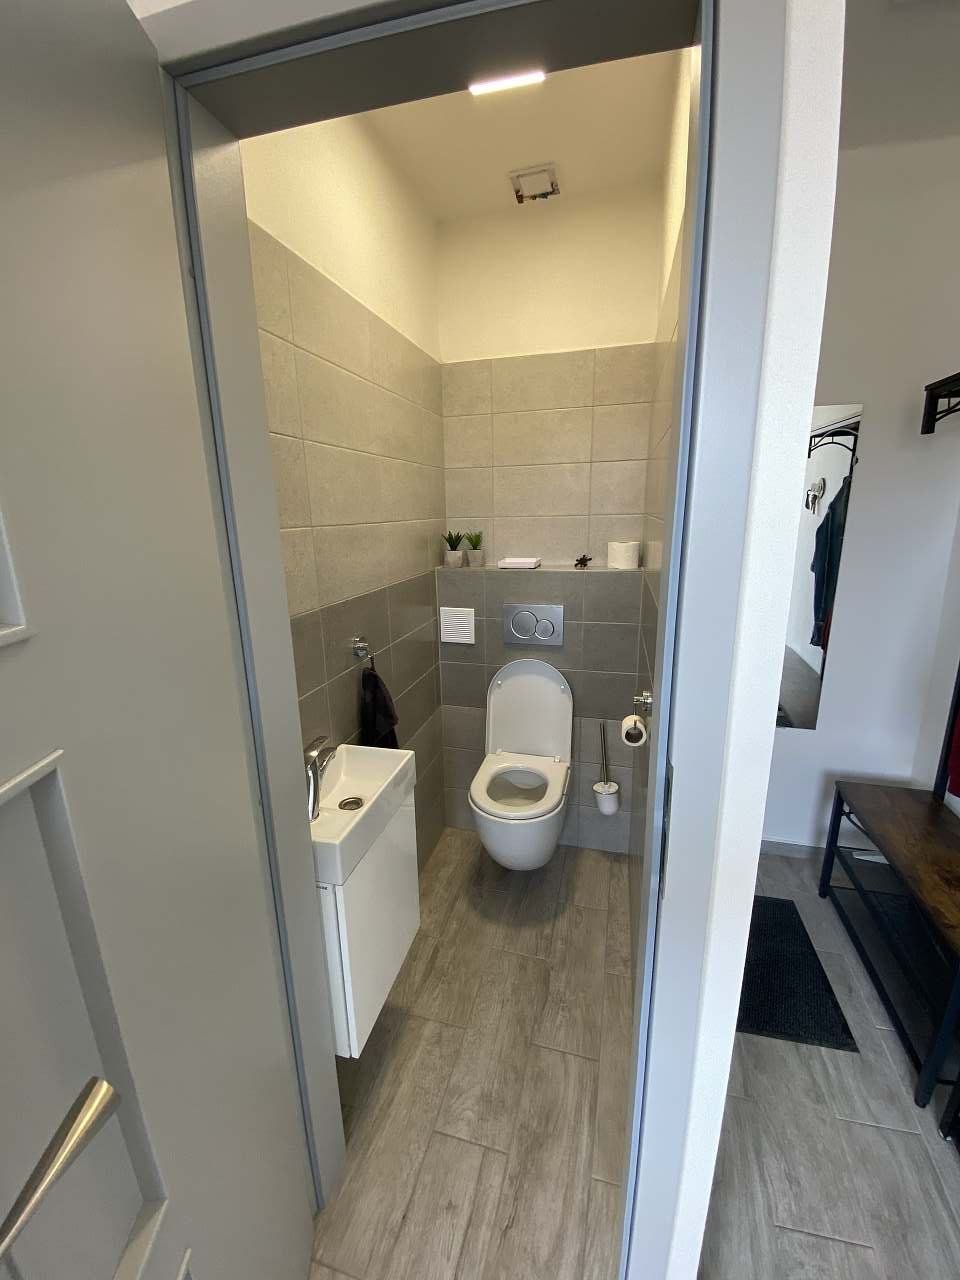 Samostatné wc